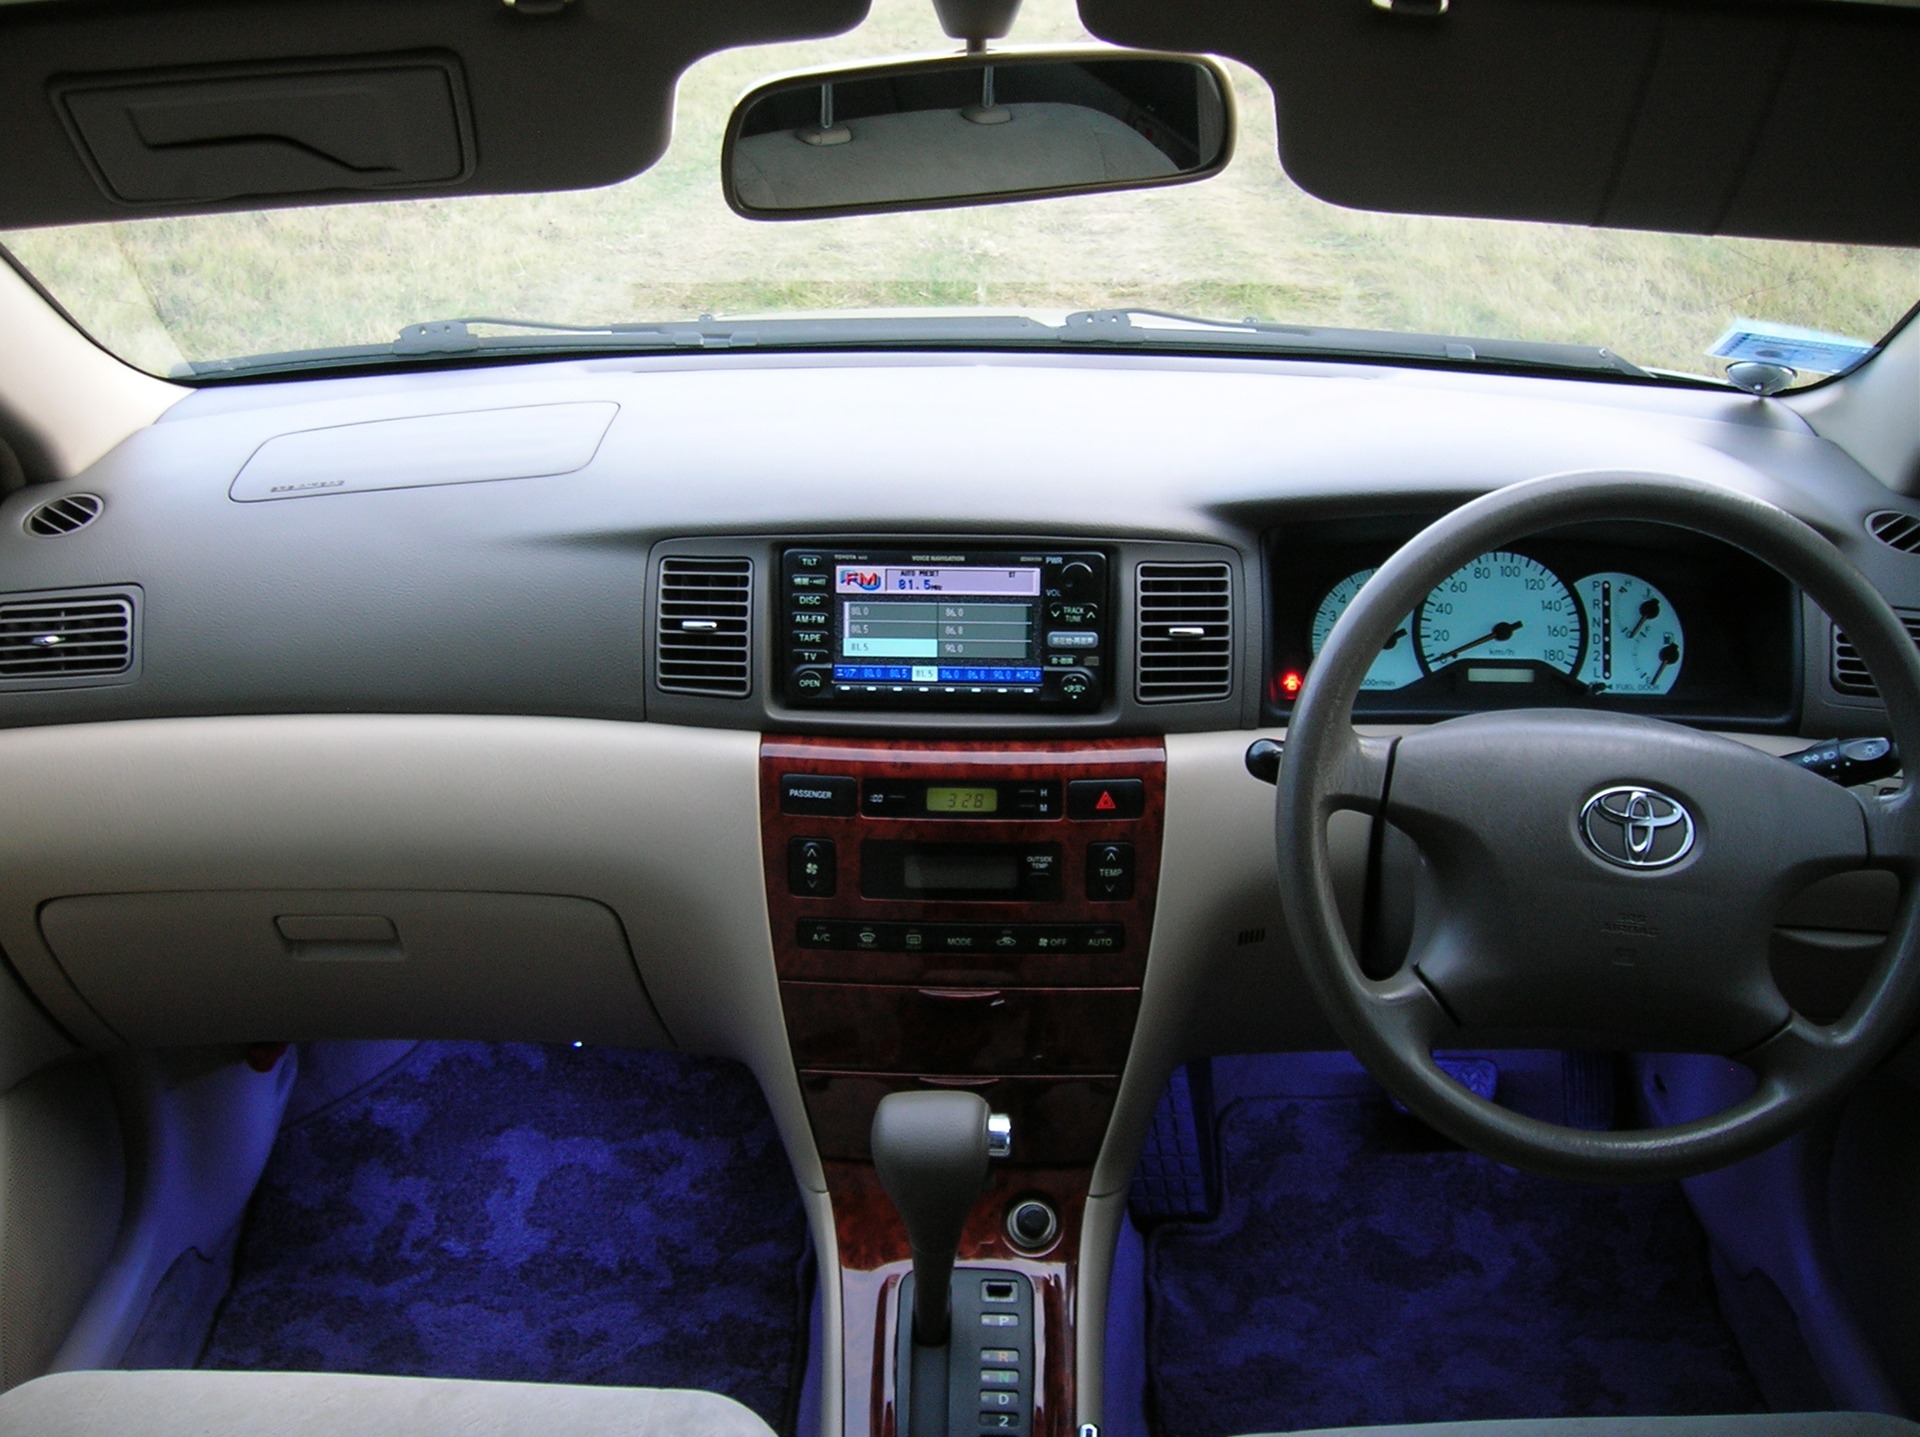     Toyota Corolla 15 2002 